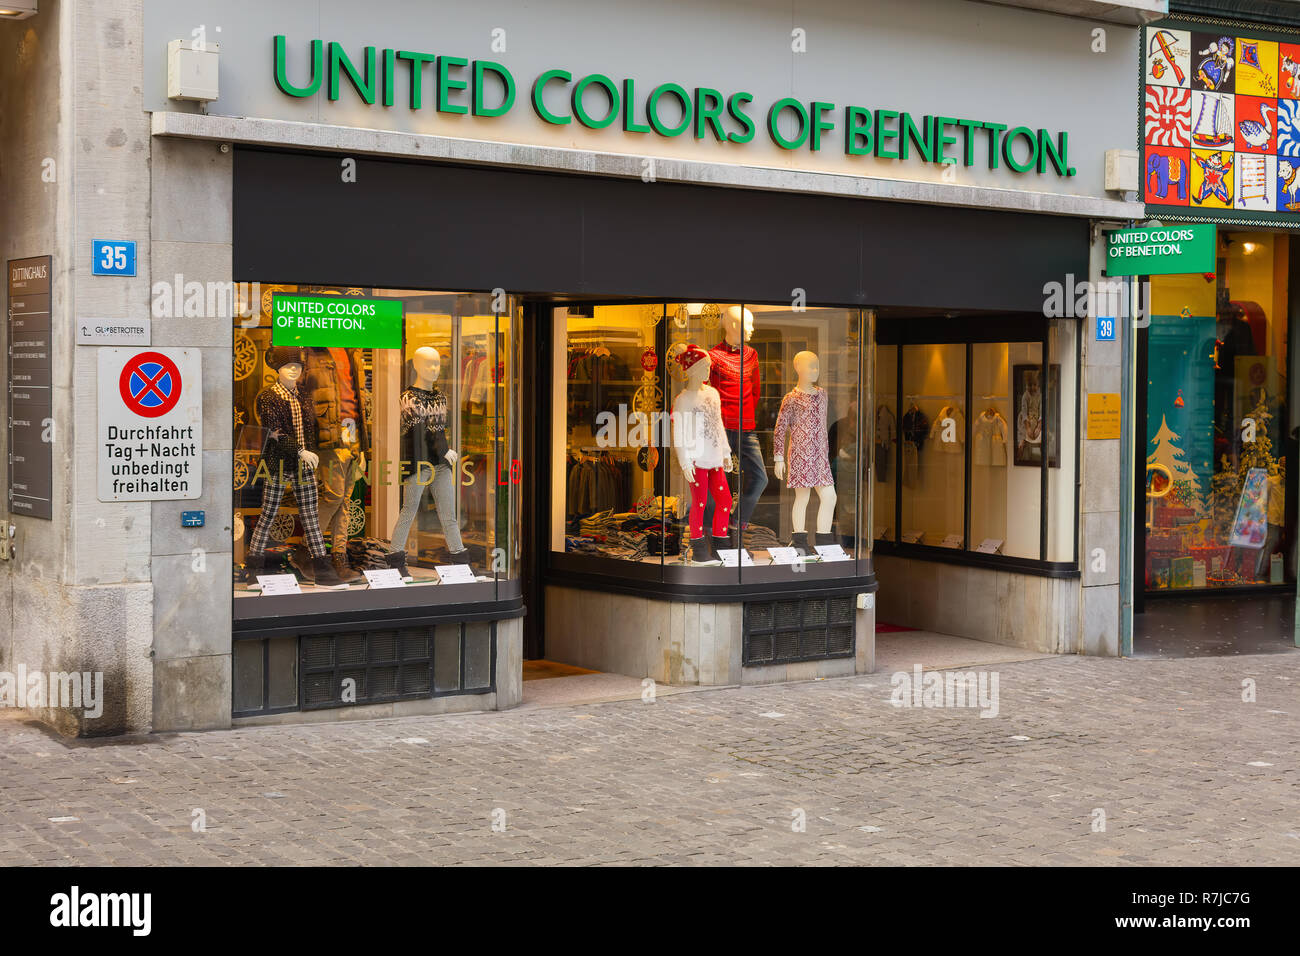 United colors benetton shop in fotografías e imágenes de alta resolución -  Alamy